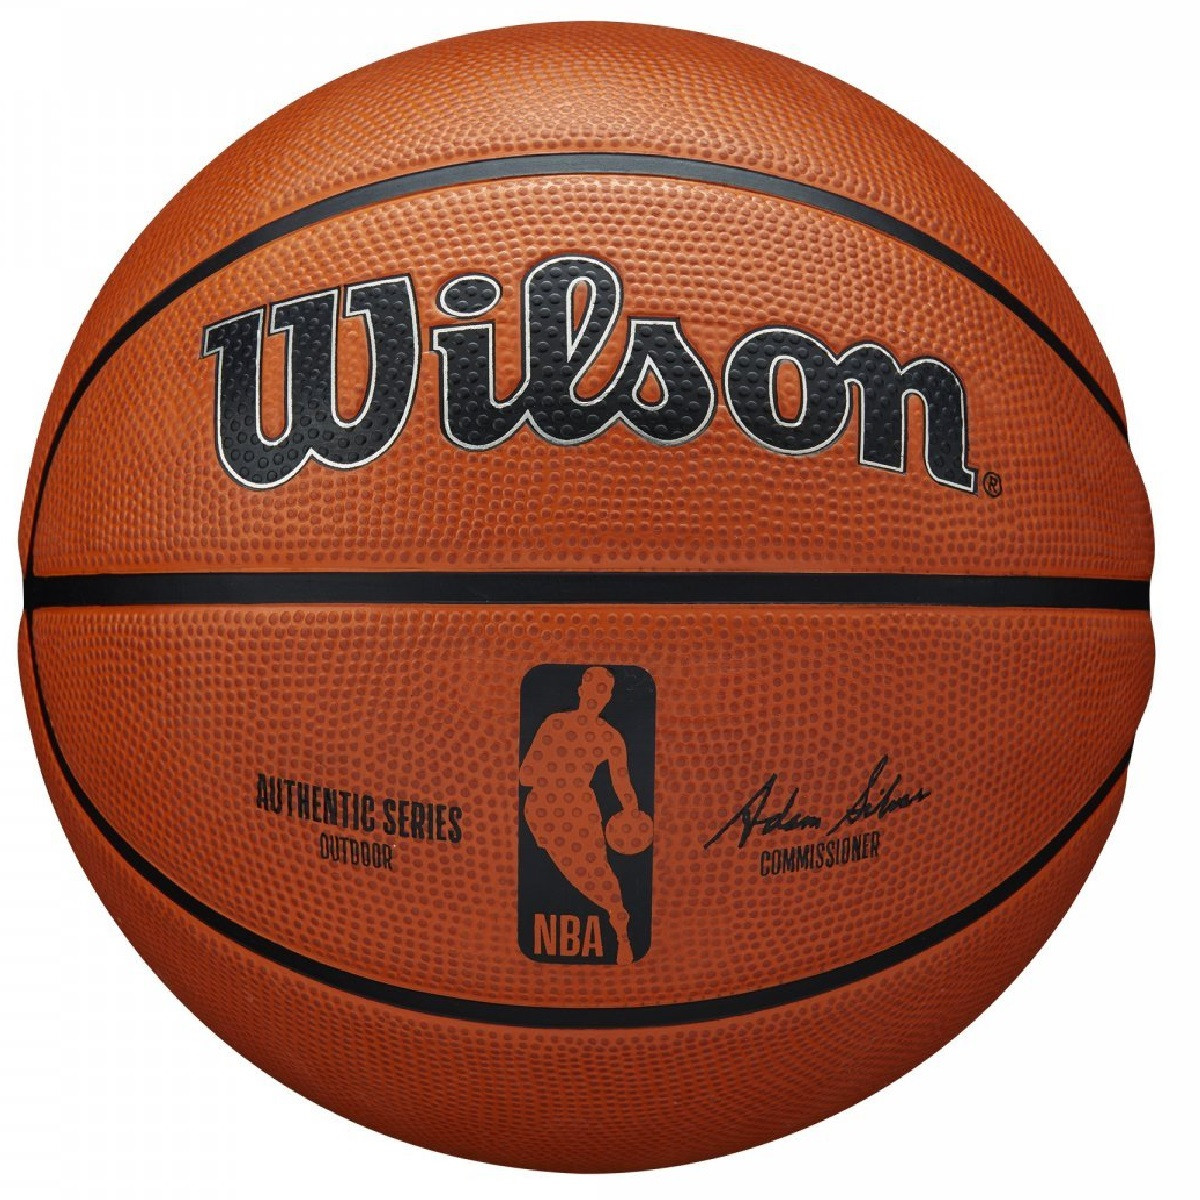 М'яч баскетбольний W NBA AUTHENTIC SERIES OUTDOOR BSKT 285 WTB7300XB07